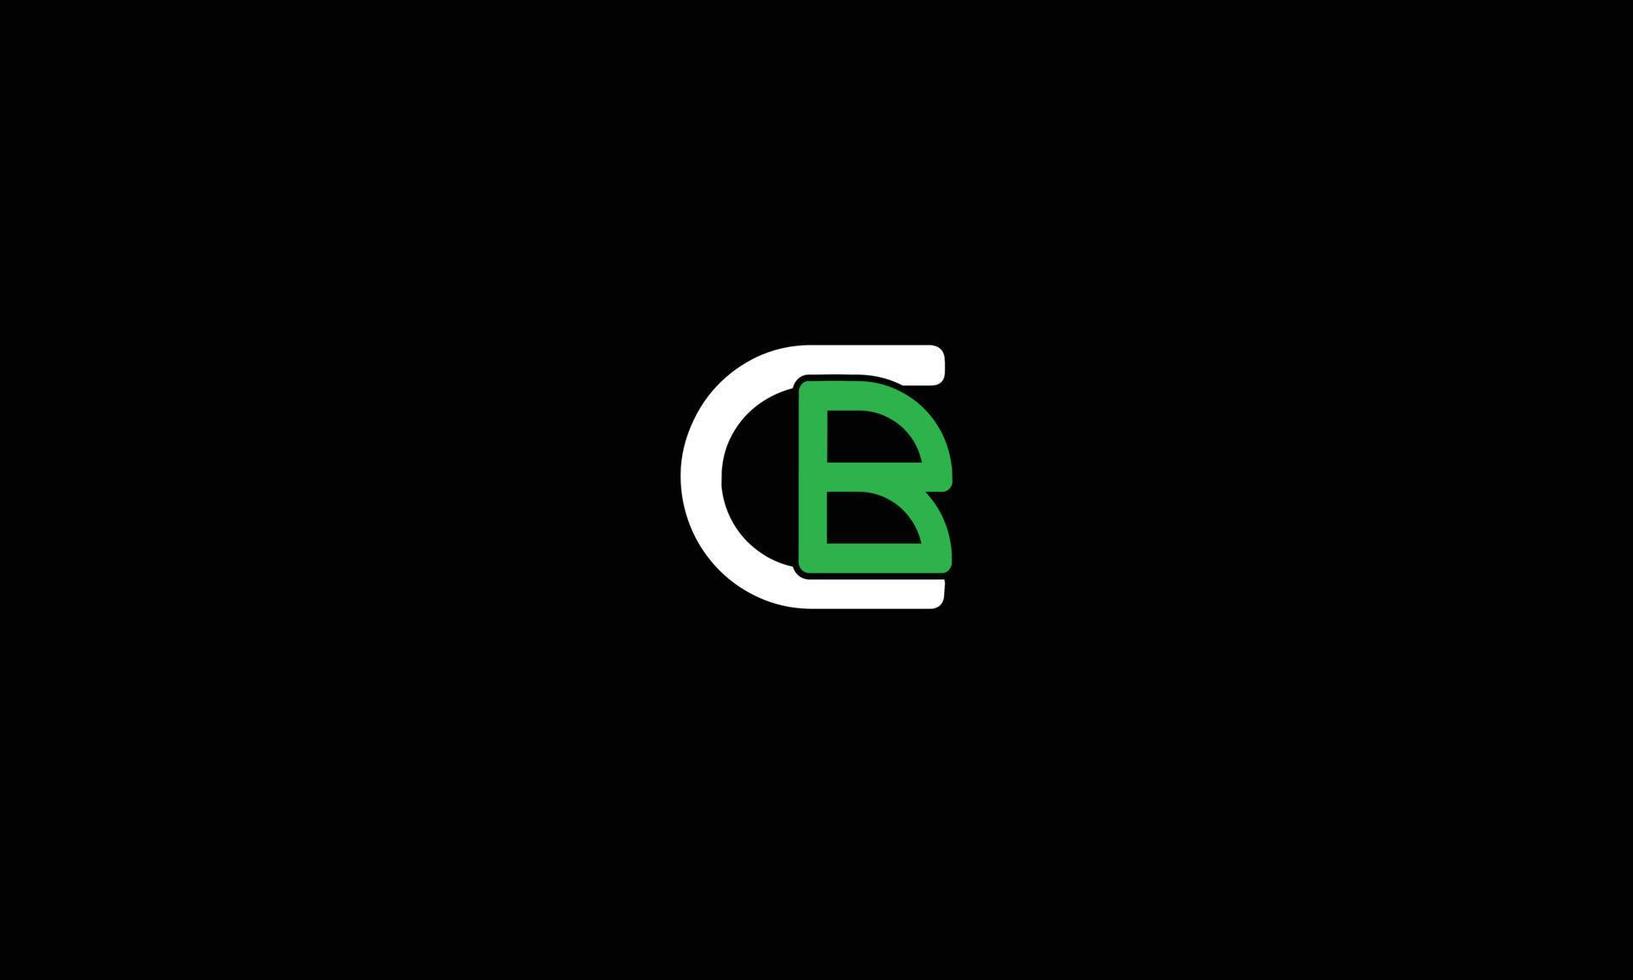 letras do alfabeto iniciais monograma logotipo cb, bc, c e b vetor